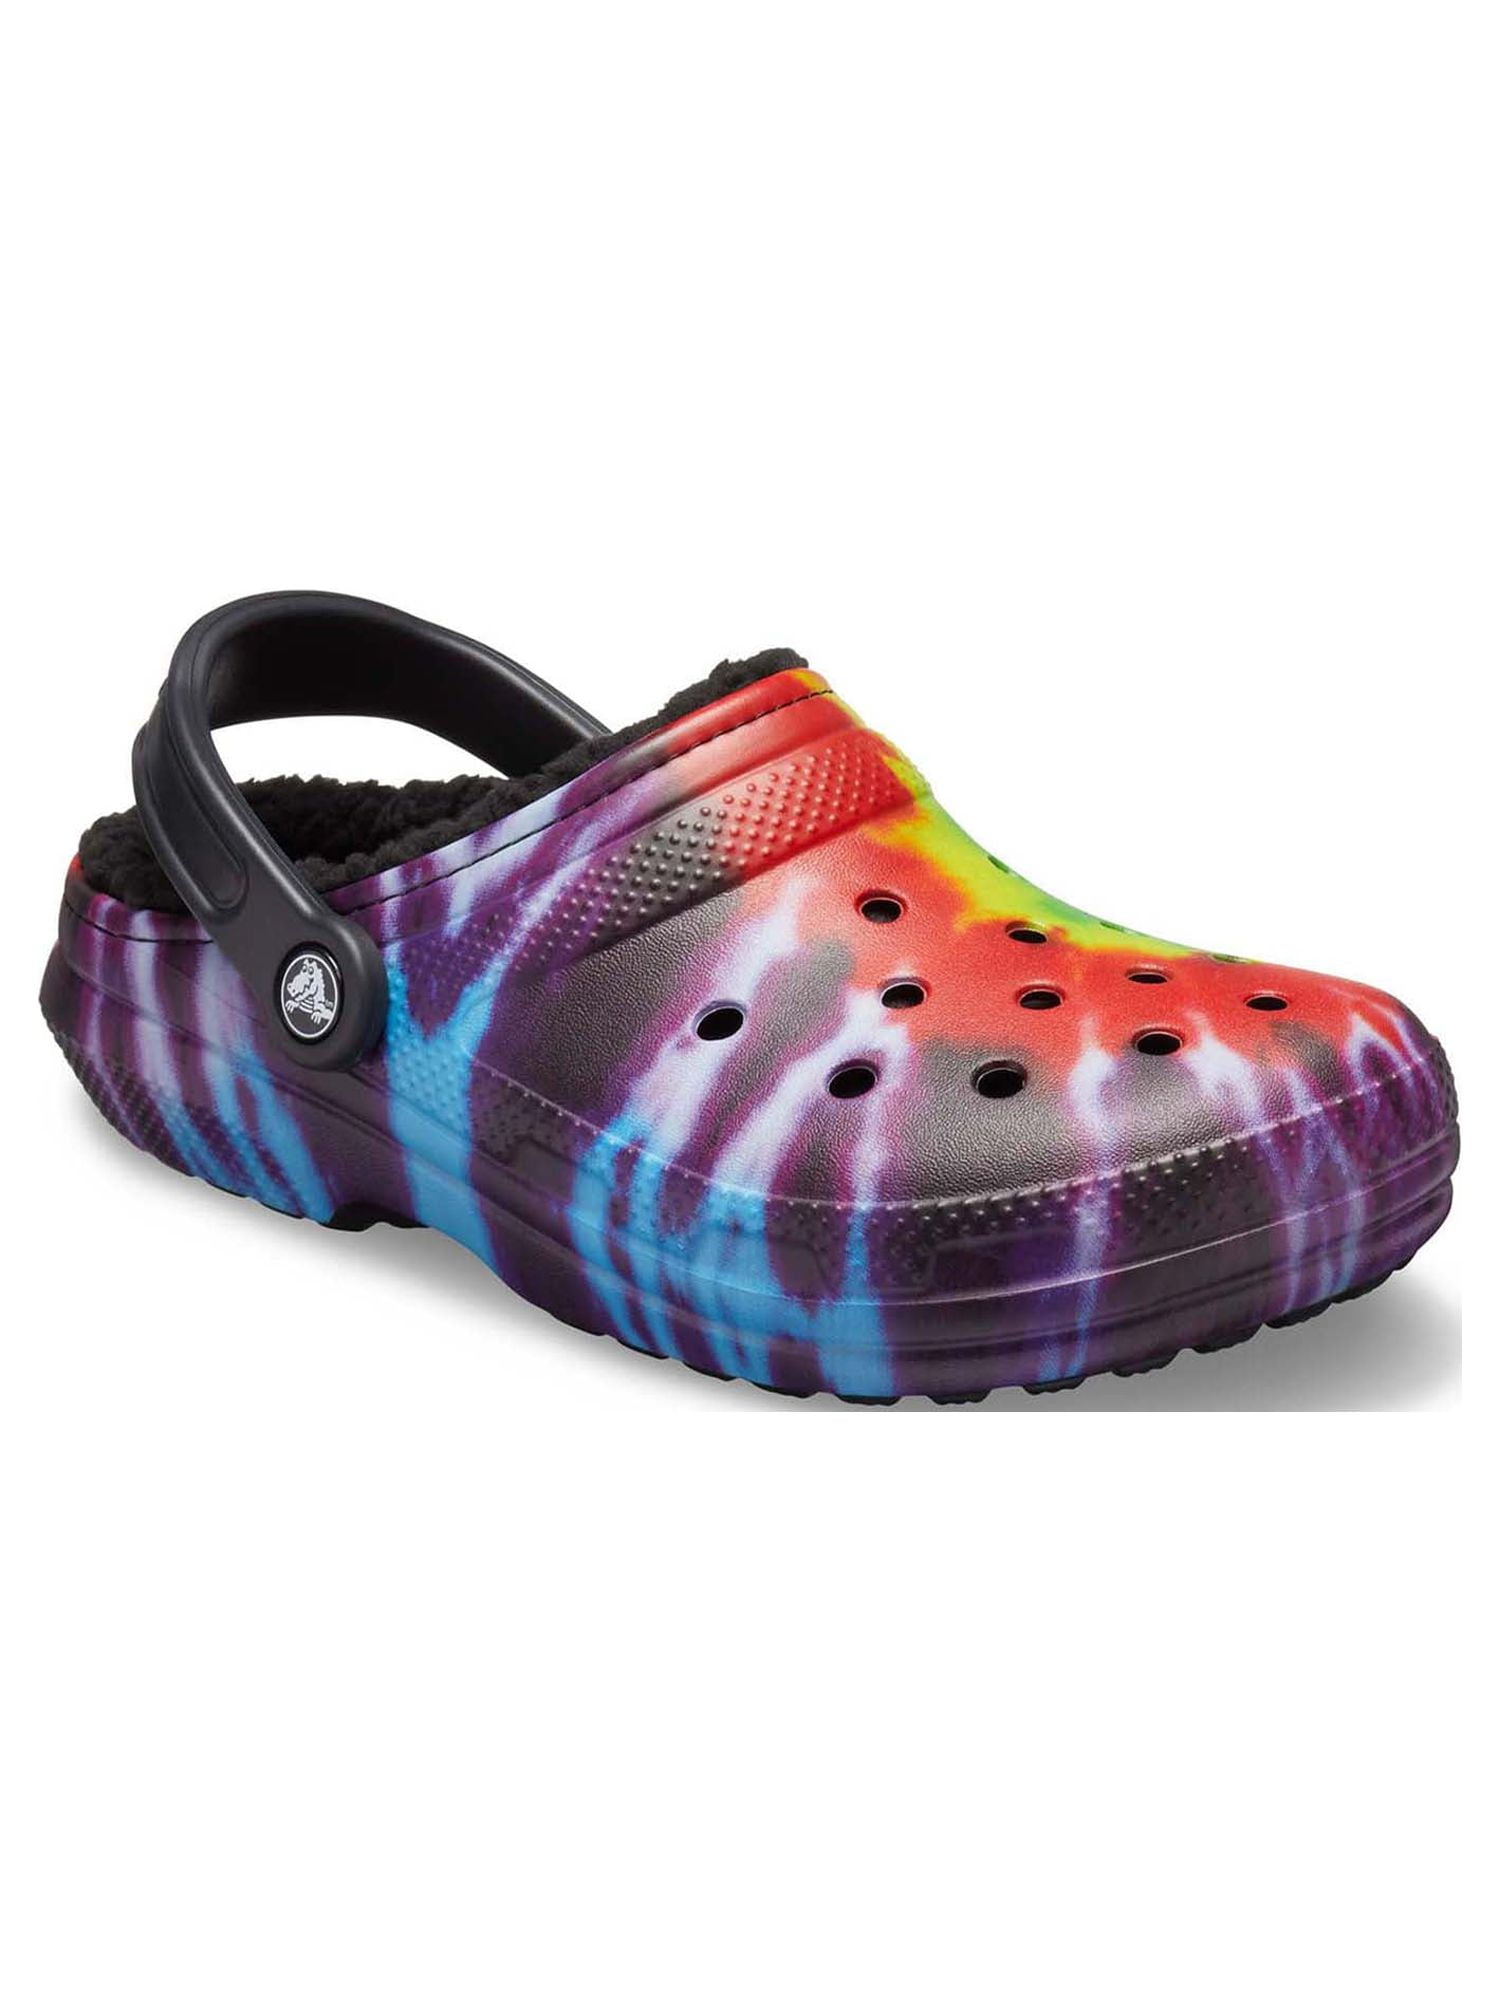 AirWalk Eva Purple Black Clogs Mules Croc Shoes Kids 8.5 9 9.5